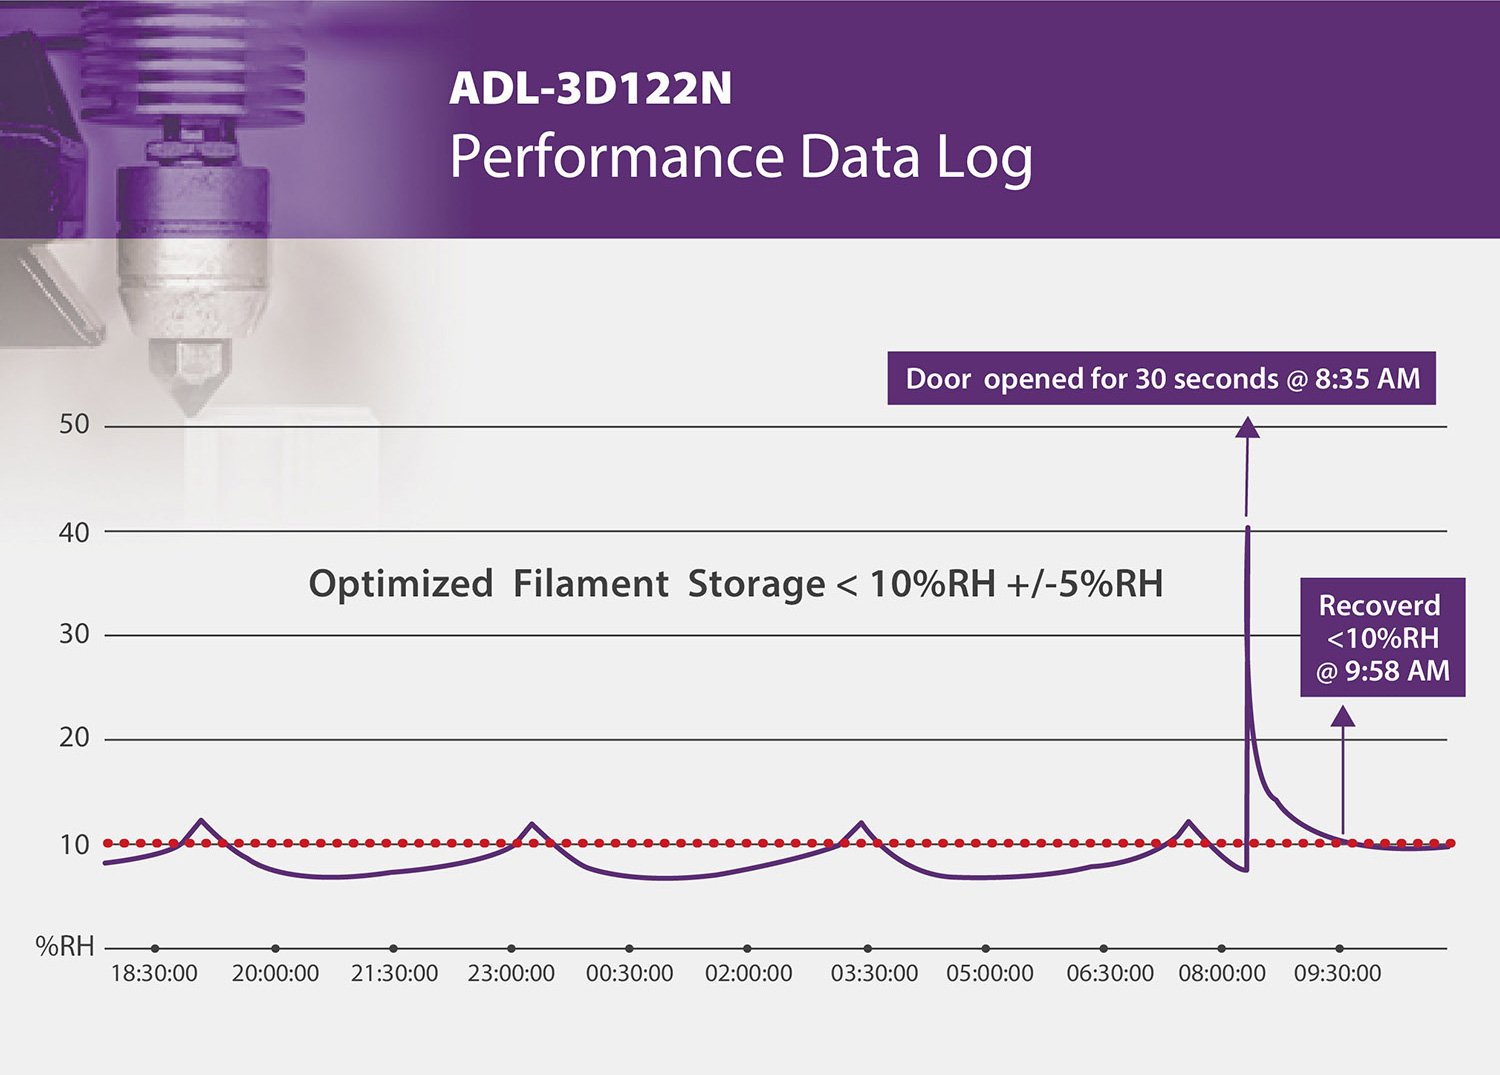 StatPro ADL-3D122N Performance Data Log